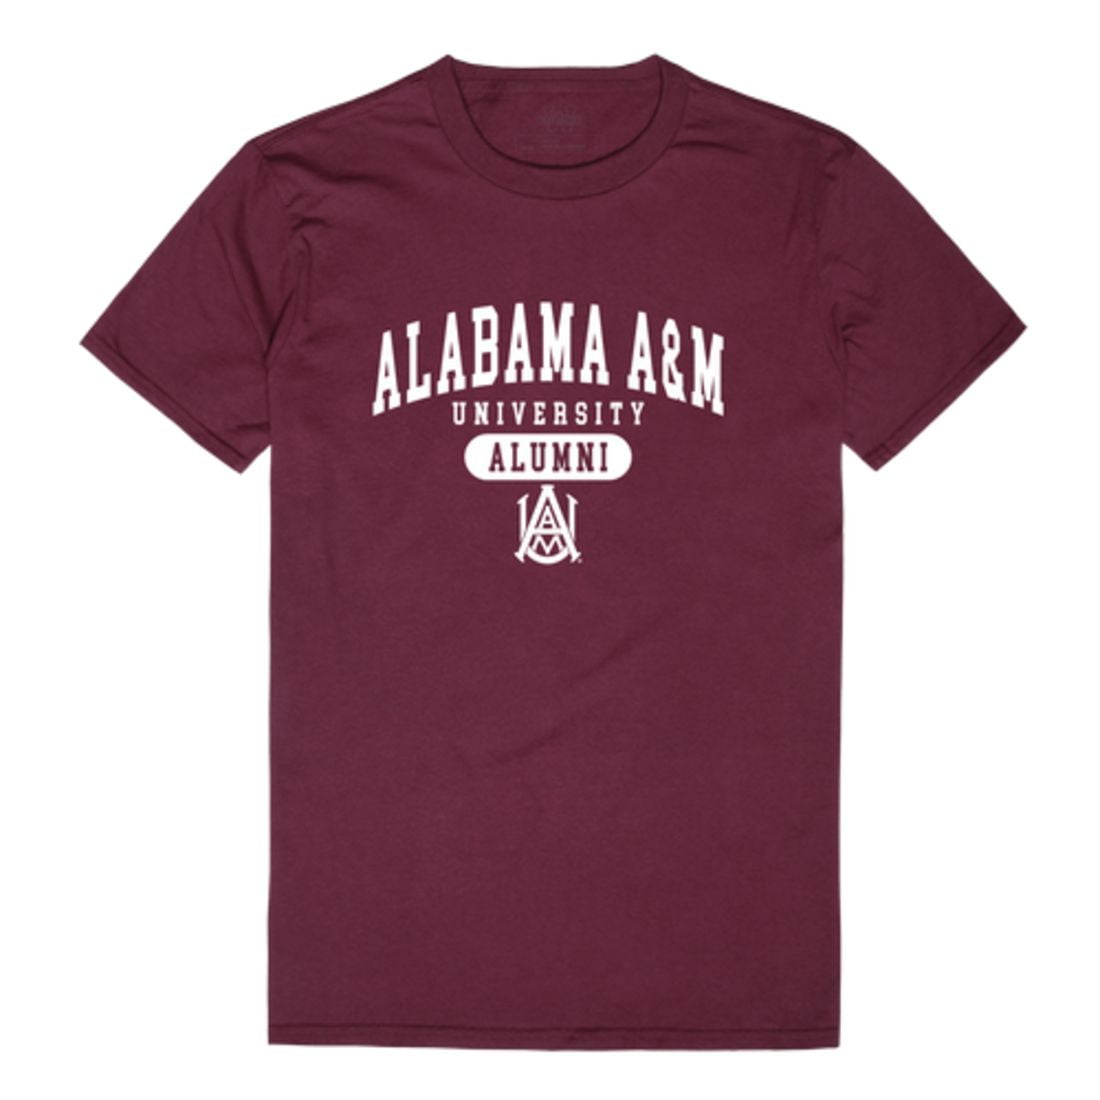 AAMU Alabama A&M University Bulldogs Alumni Tee T-Shirt Maroon XL ...